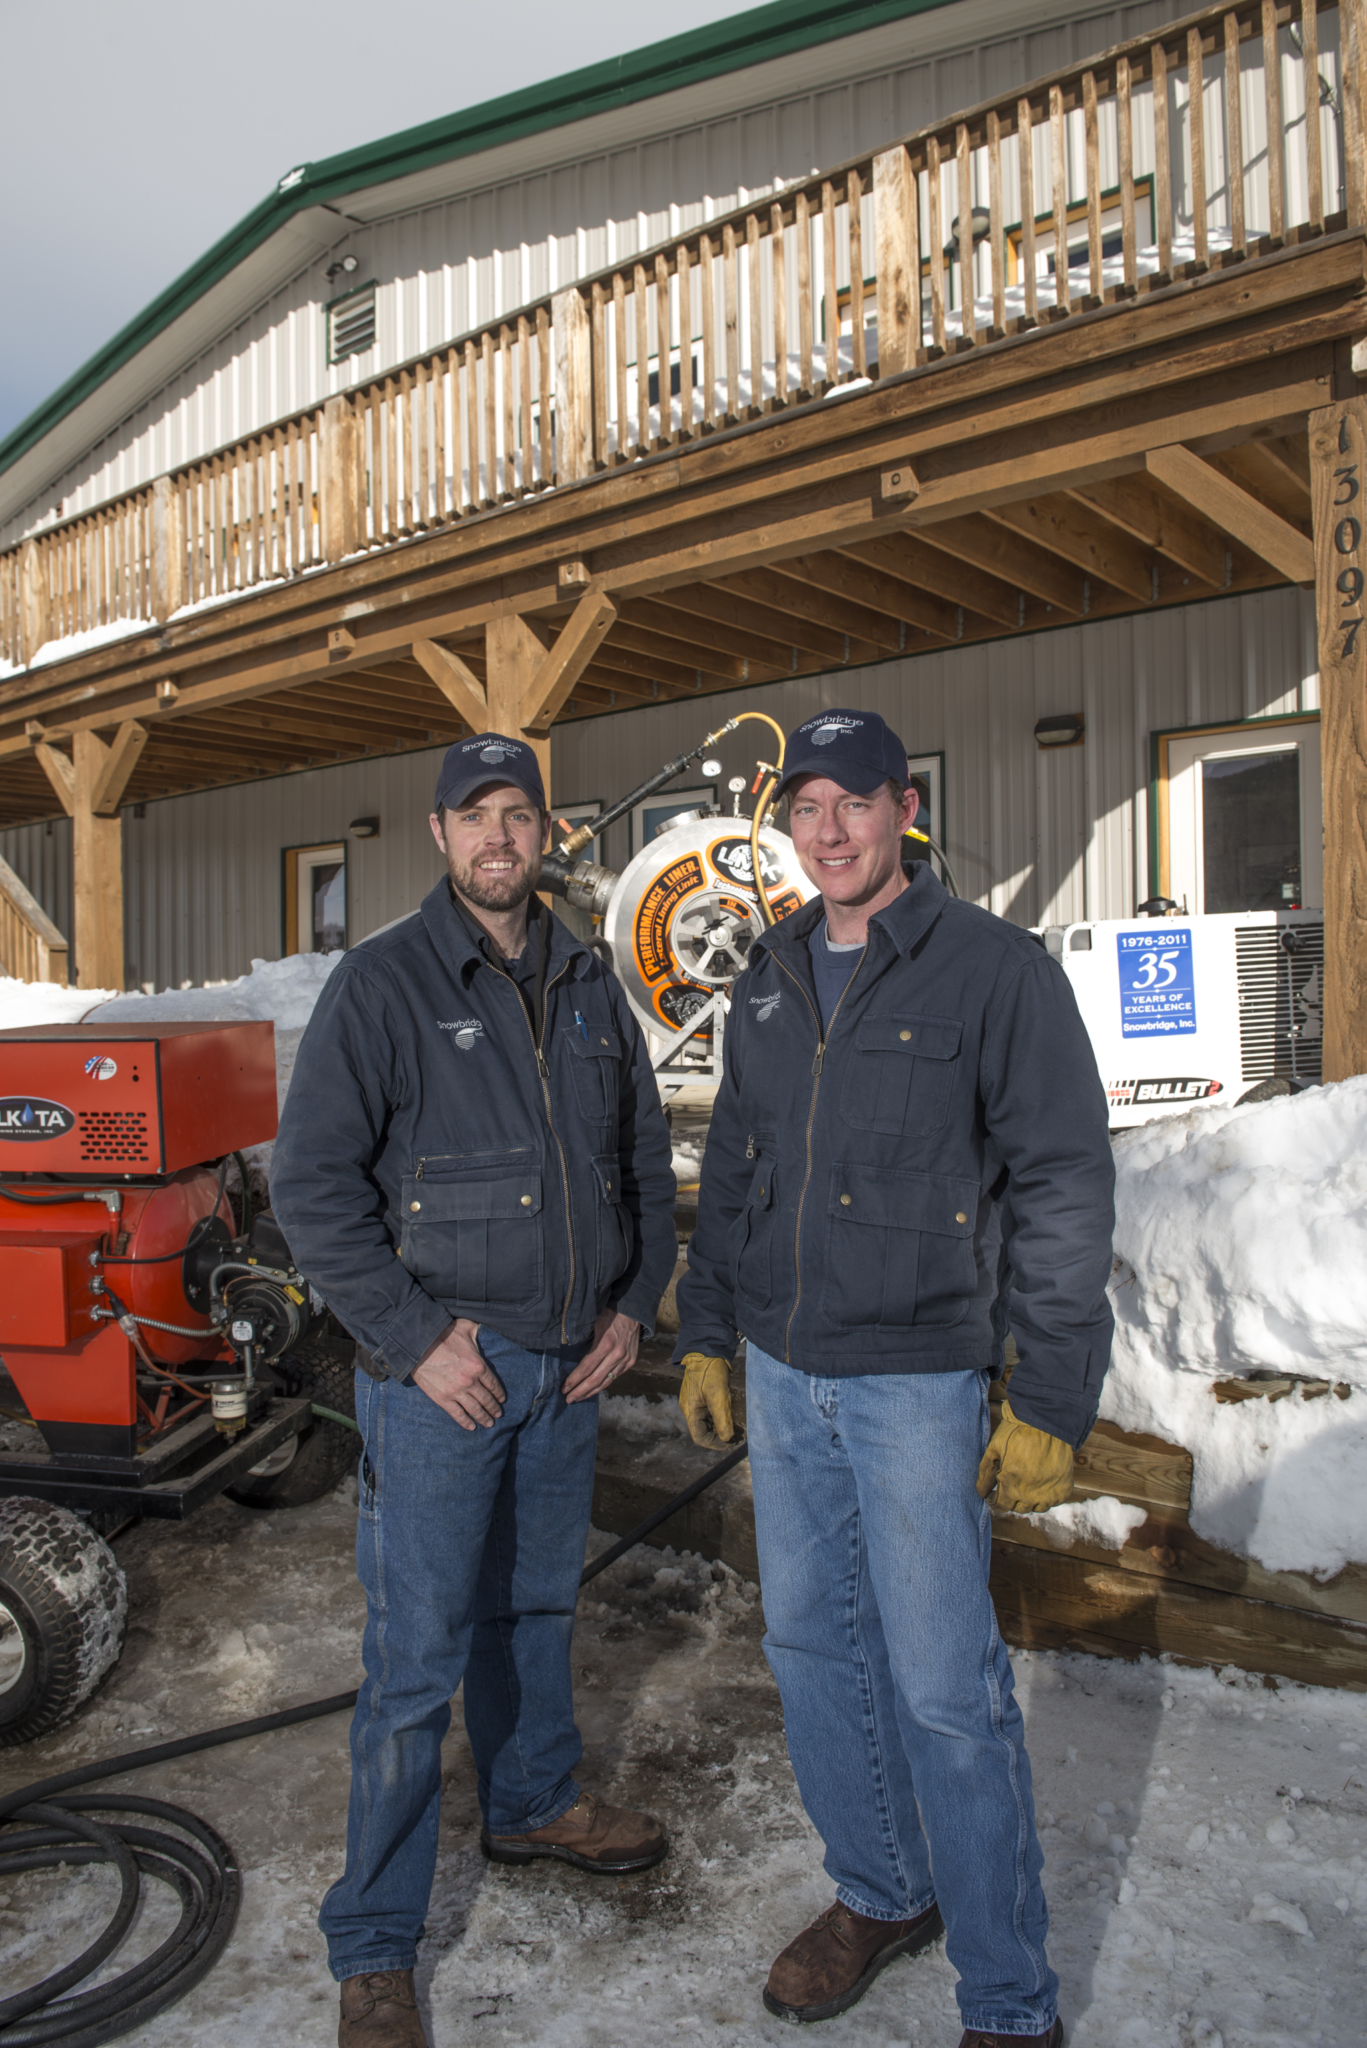 Snowbridge Inc. owners Chris and Bill Tatro